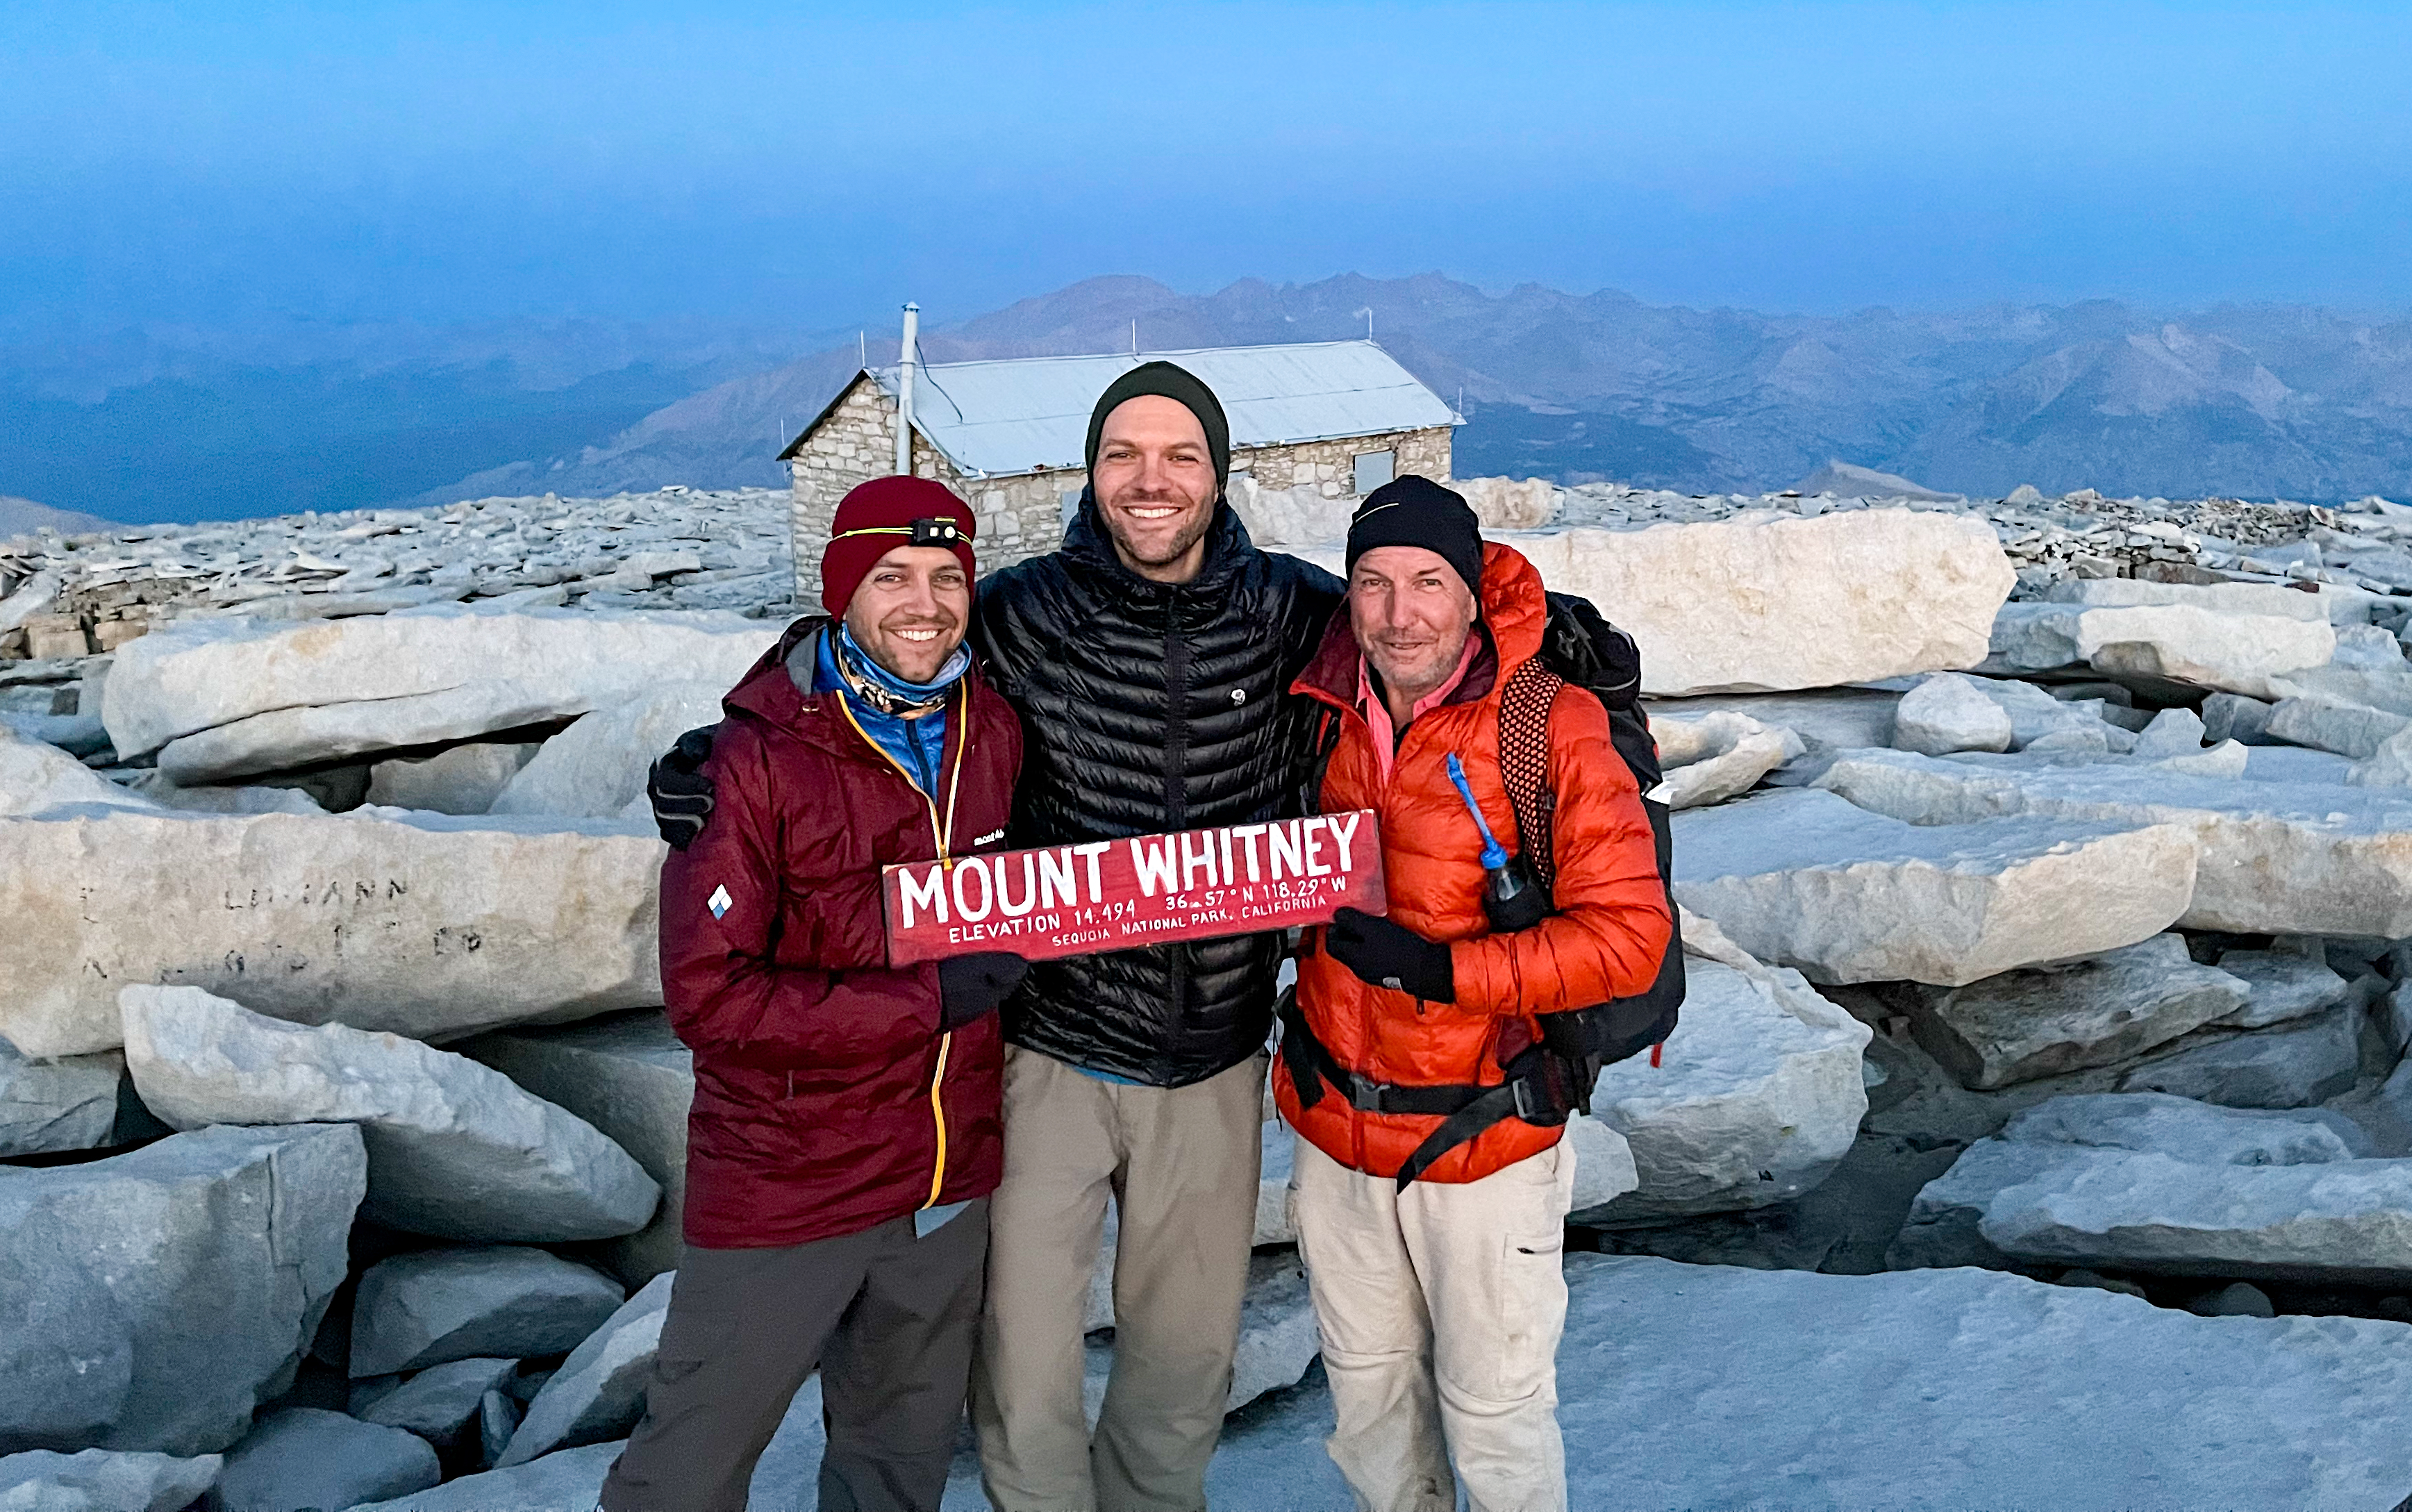 Mount Whitney summit